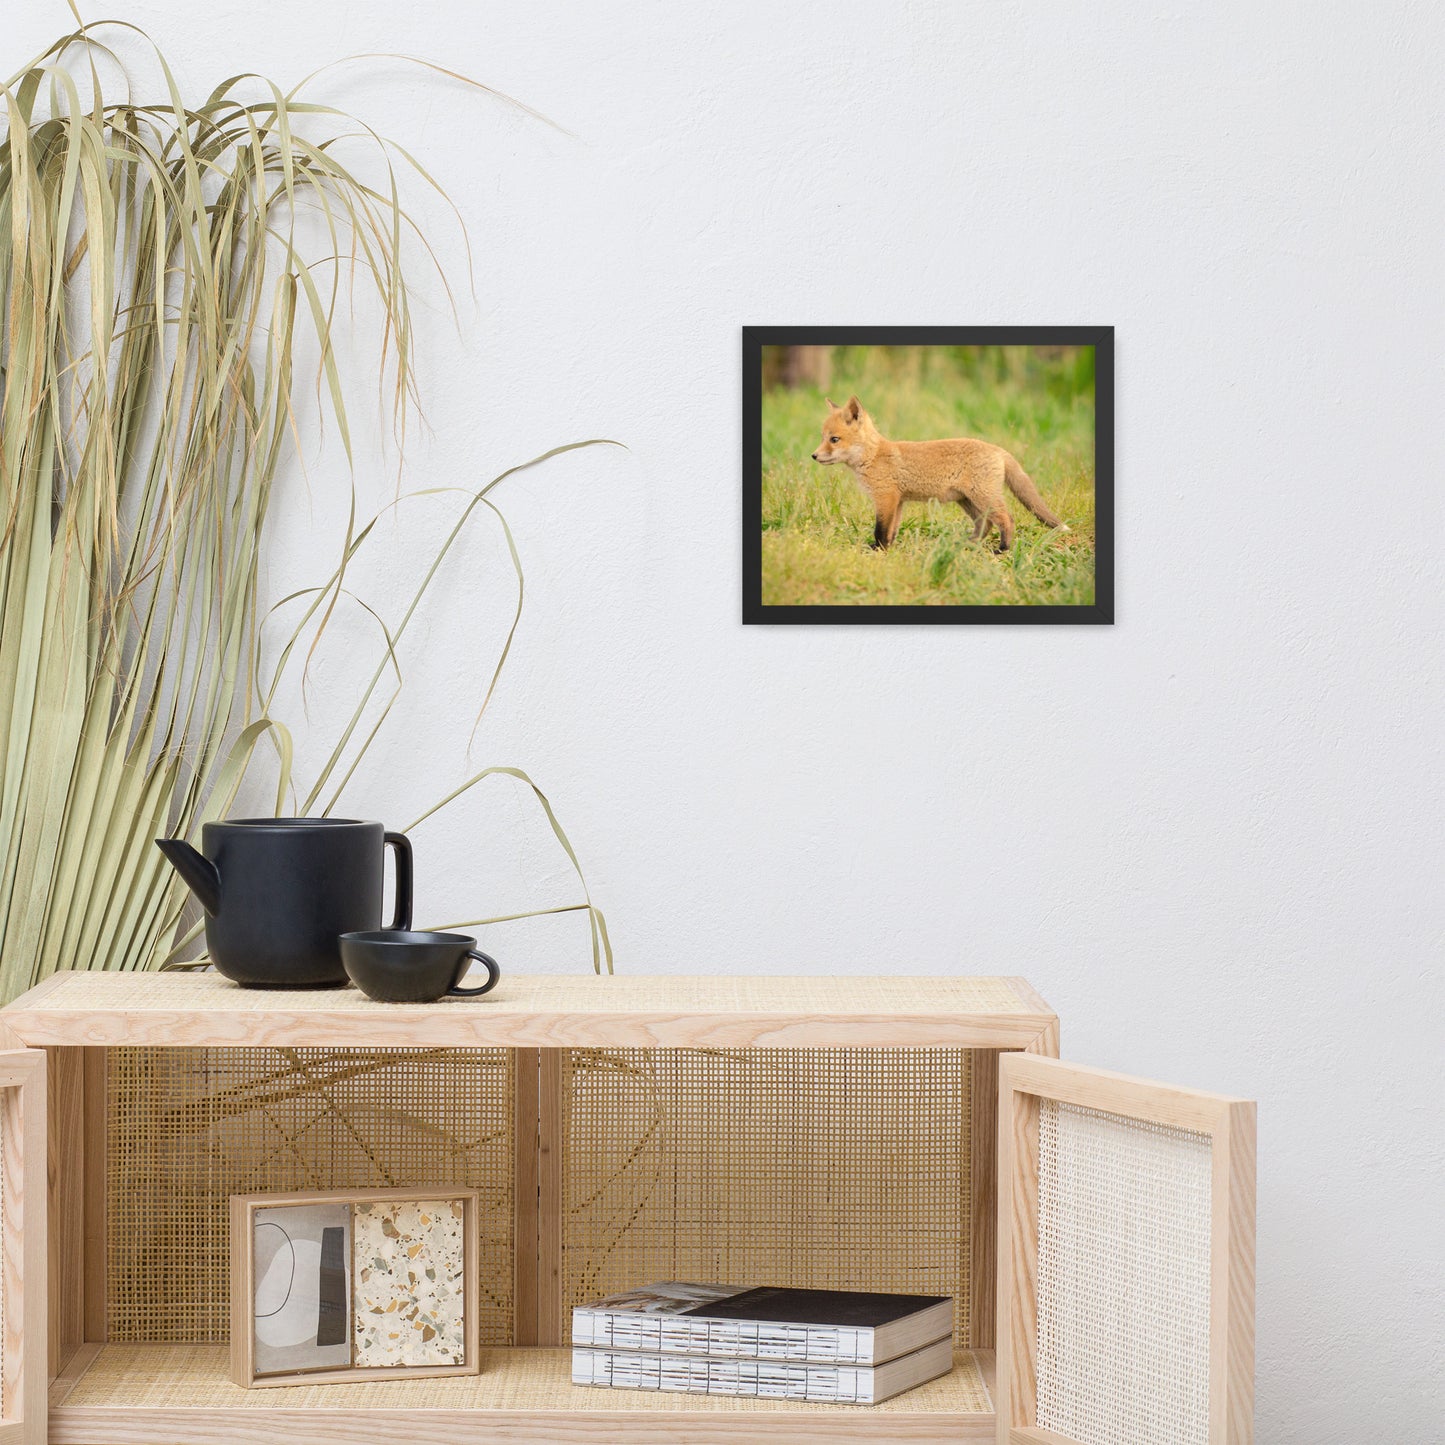 Neutral Nursery Wall Decor: Baby Fox Pup In Meadow/ Animal / Wildlife / Nature Photographic Artwork - Framed Artwork - Wall Decor